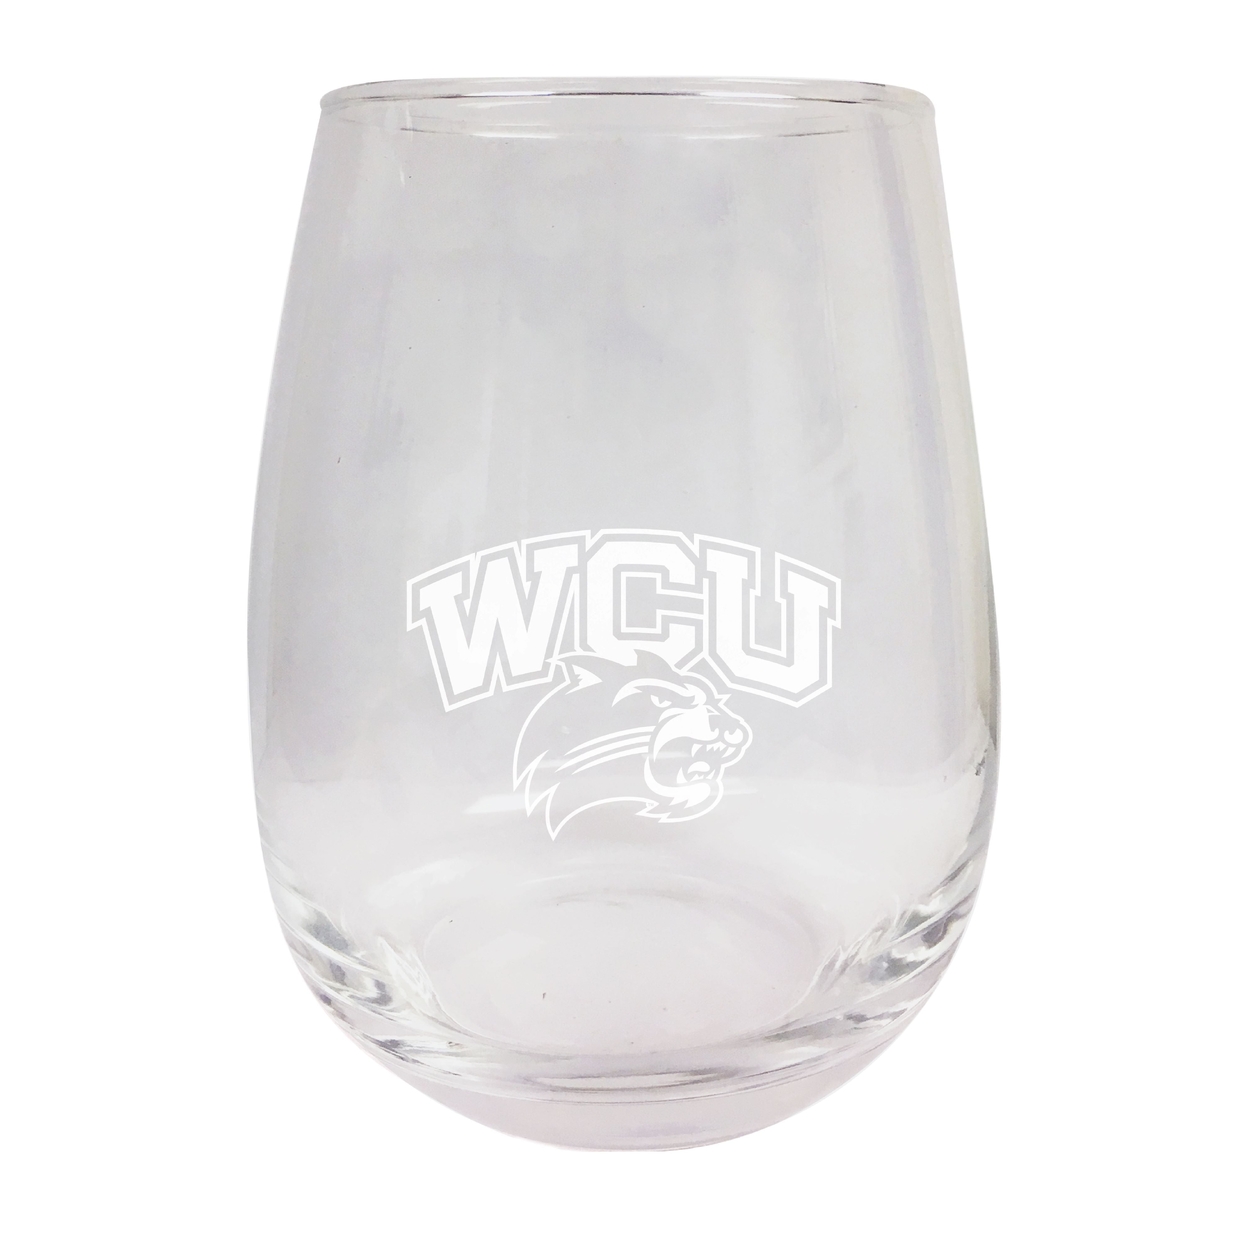 West Carolina University Etched Stemless Wine Glass